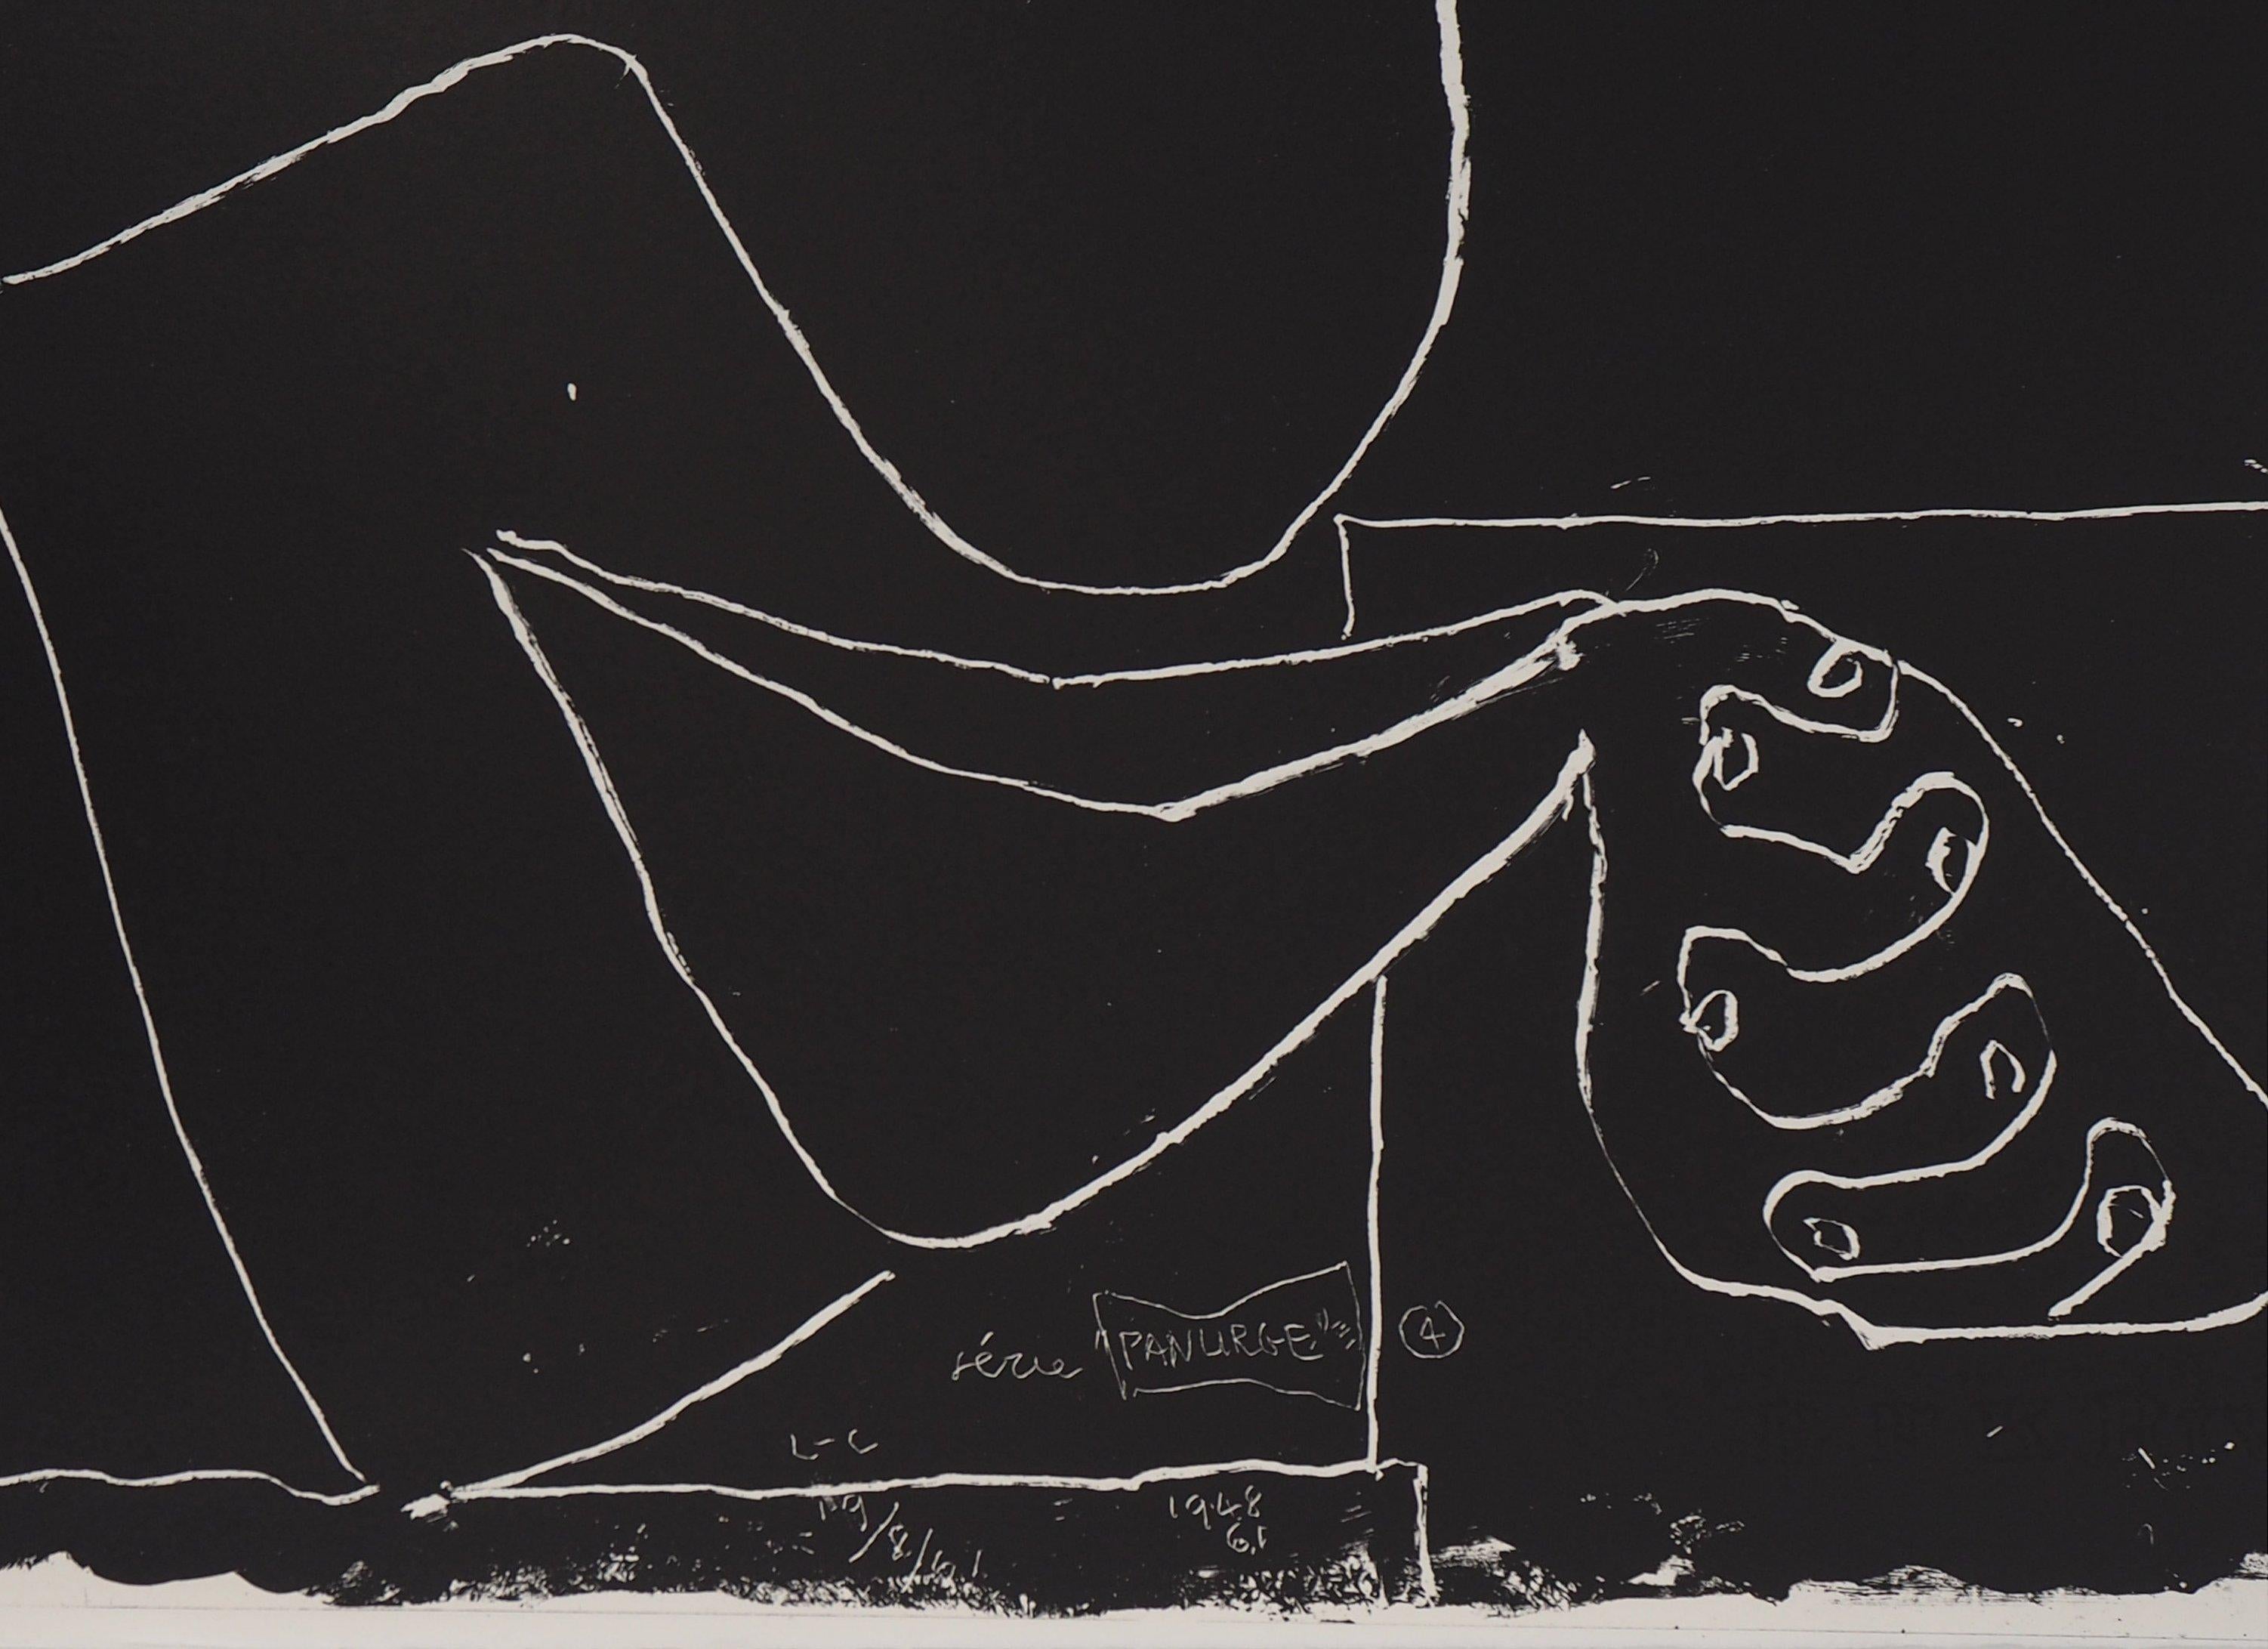 Hands and Dancer - Original Lithograph (Mourlot) - Print by Le Corbusier